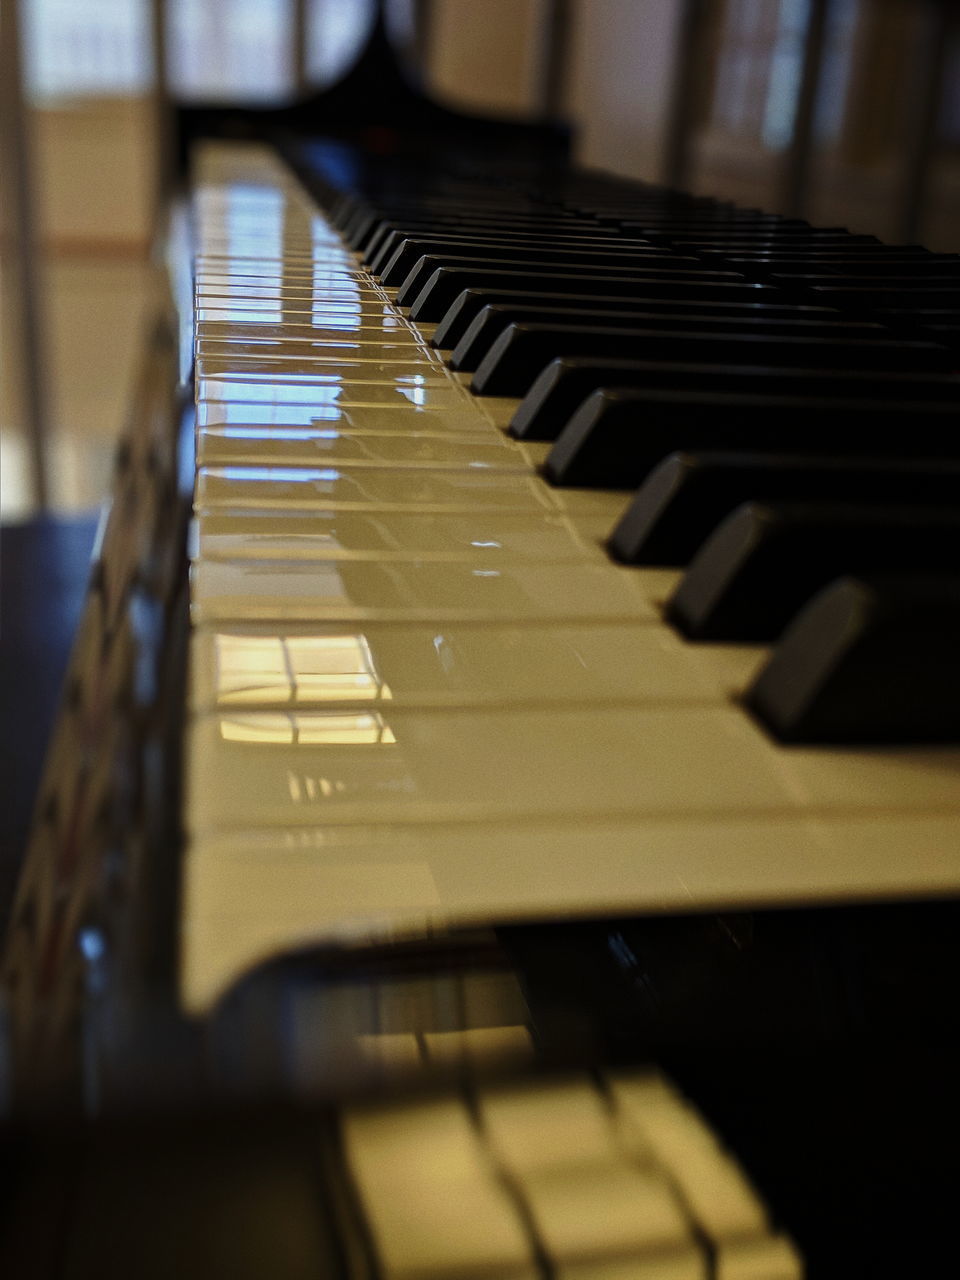 HIGH ANGLE VIEW OF PIANO KEYS AT HOME